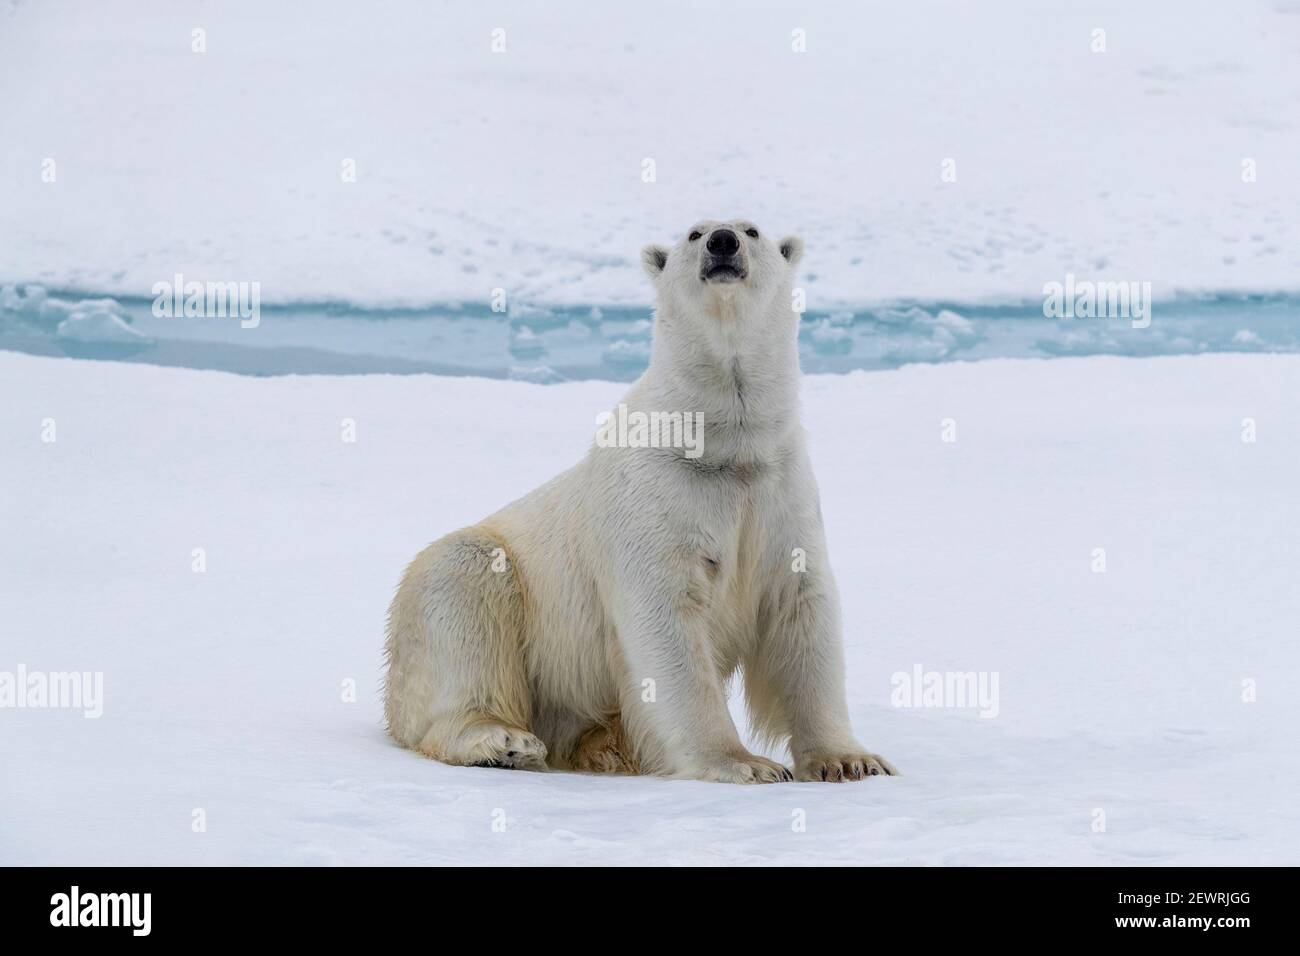 Adult polar bear (Ursus maritimus) cleaning its fur from a recent kill on ice near Ellesmere Island, Nunavut, Canada, North America Stock Photo